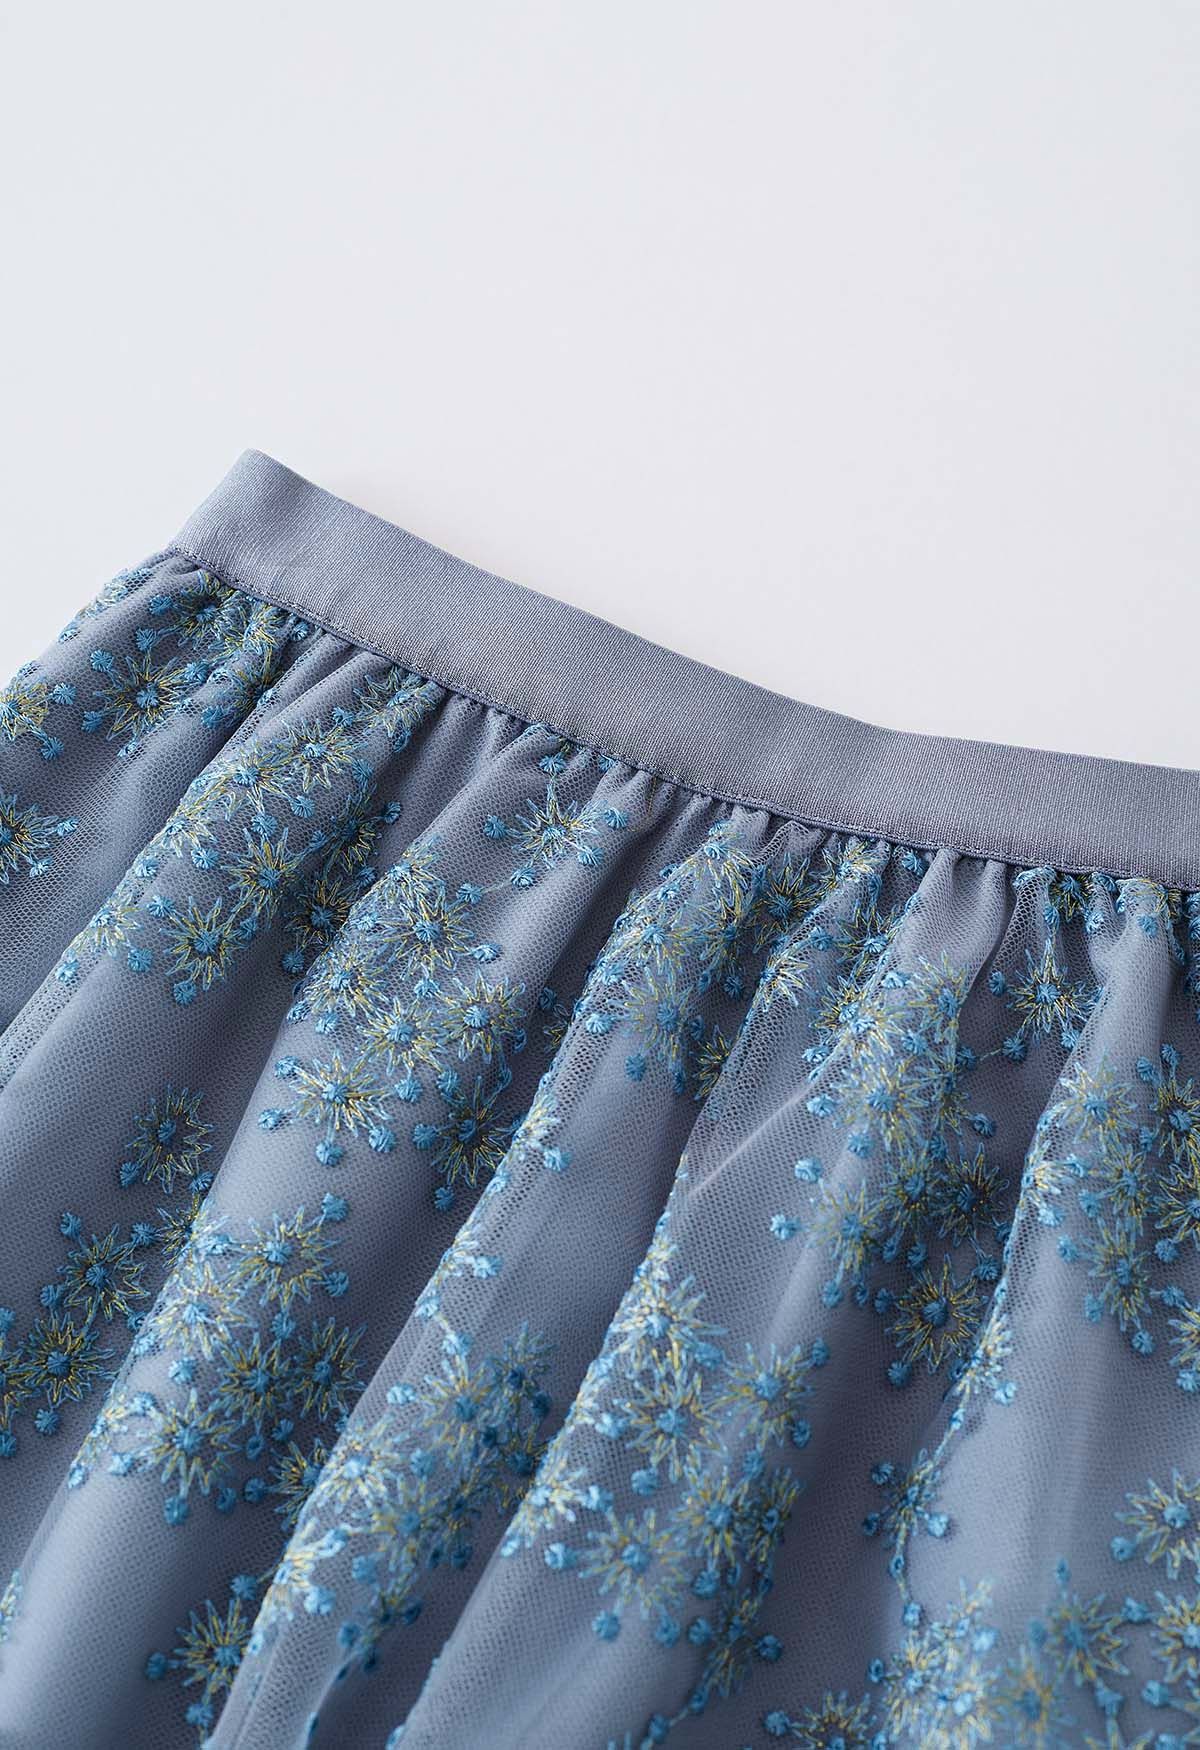 Metallic Embroidered Floret Mesh Midi Skirt in Dusty Blue